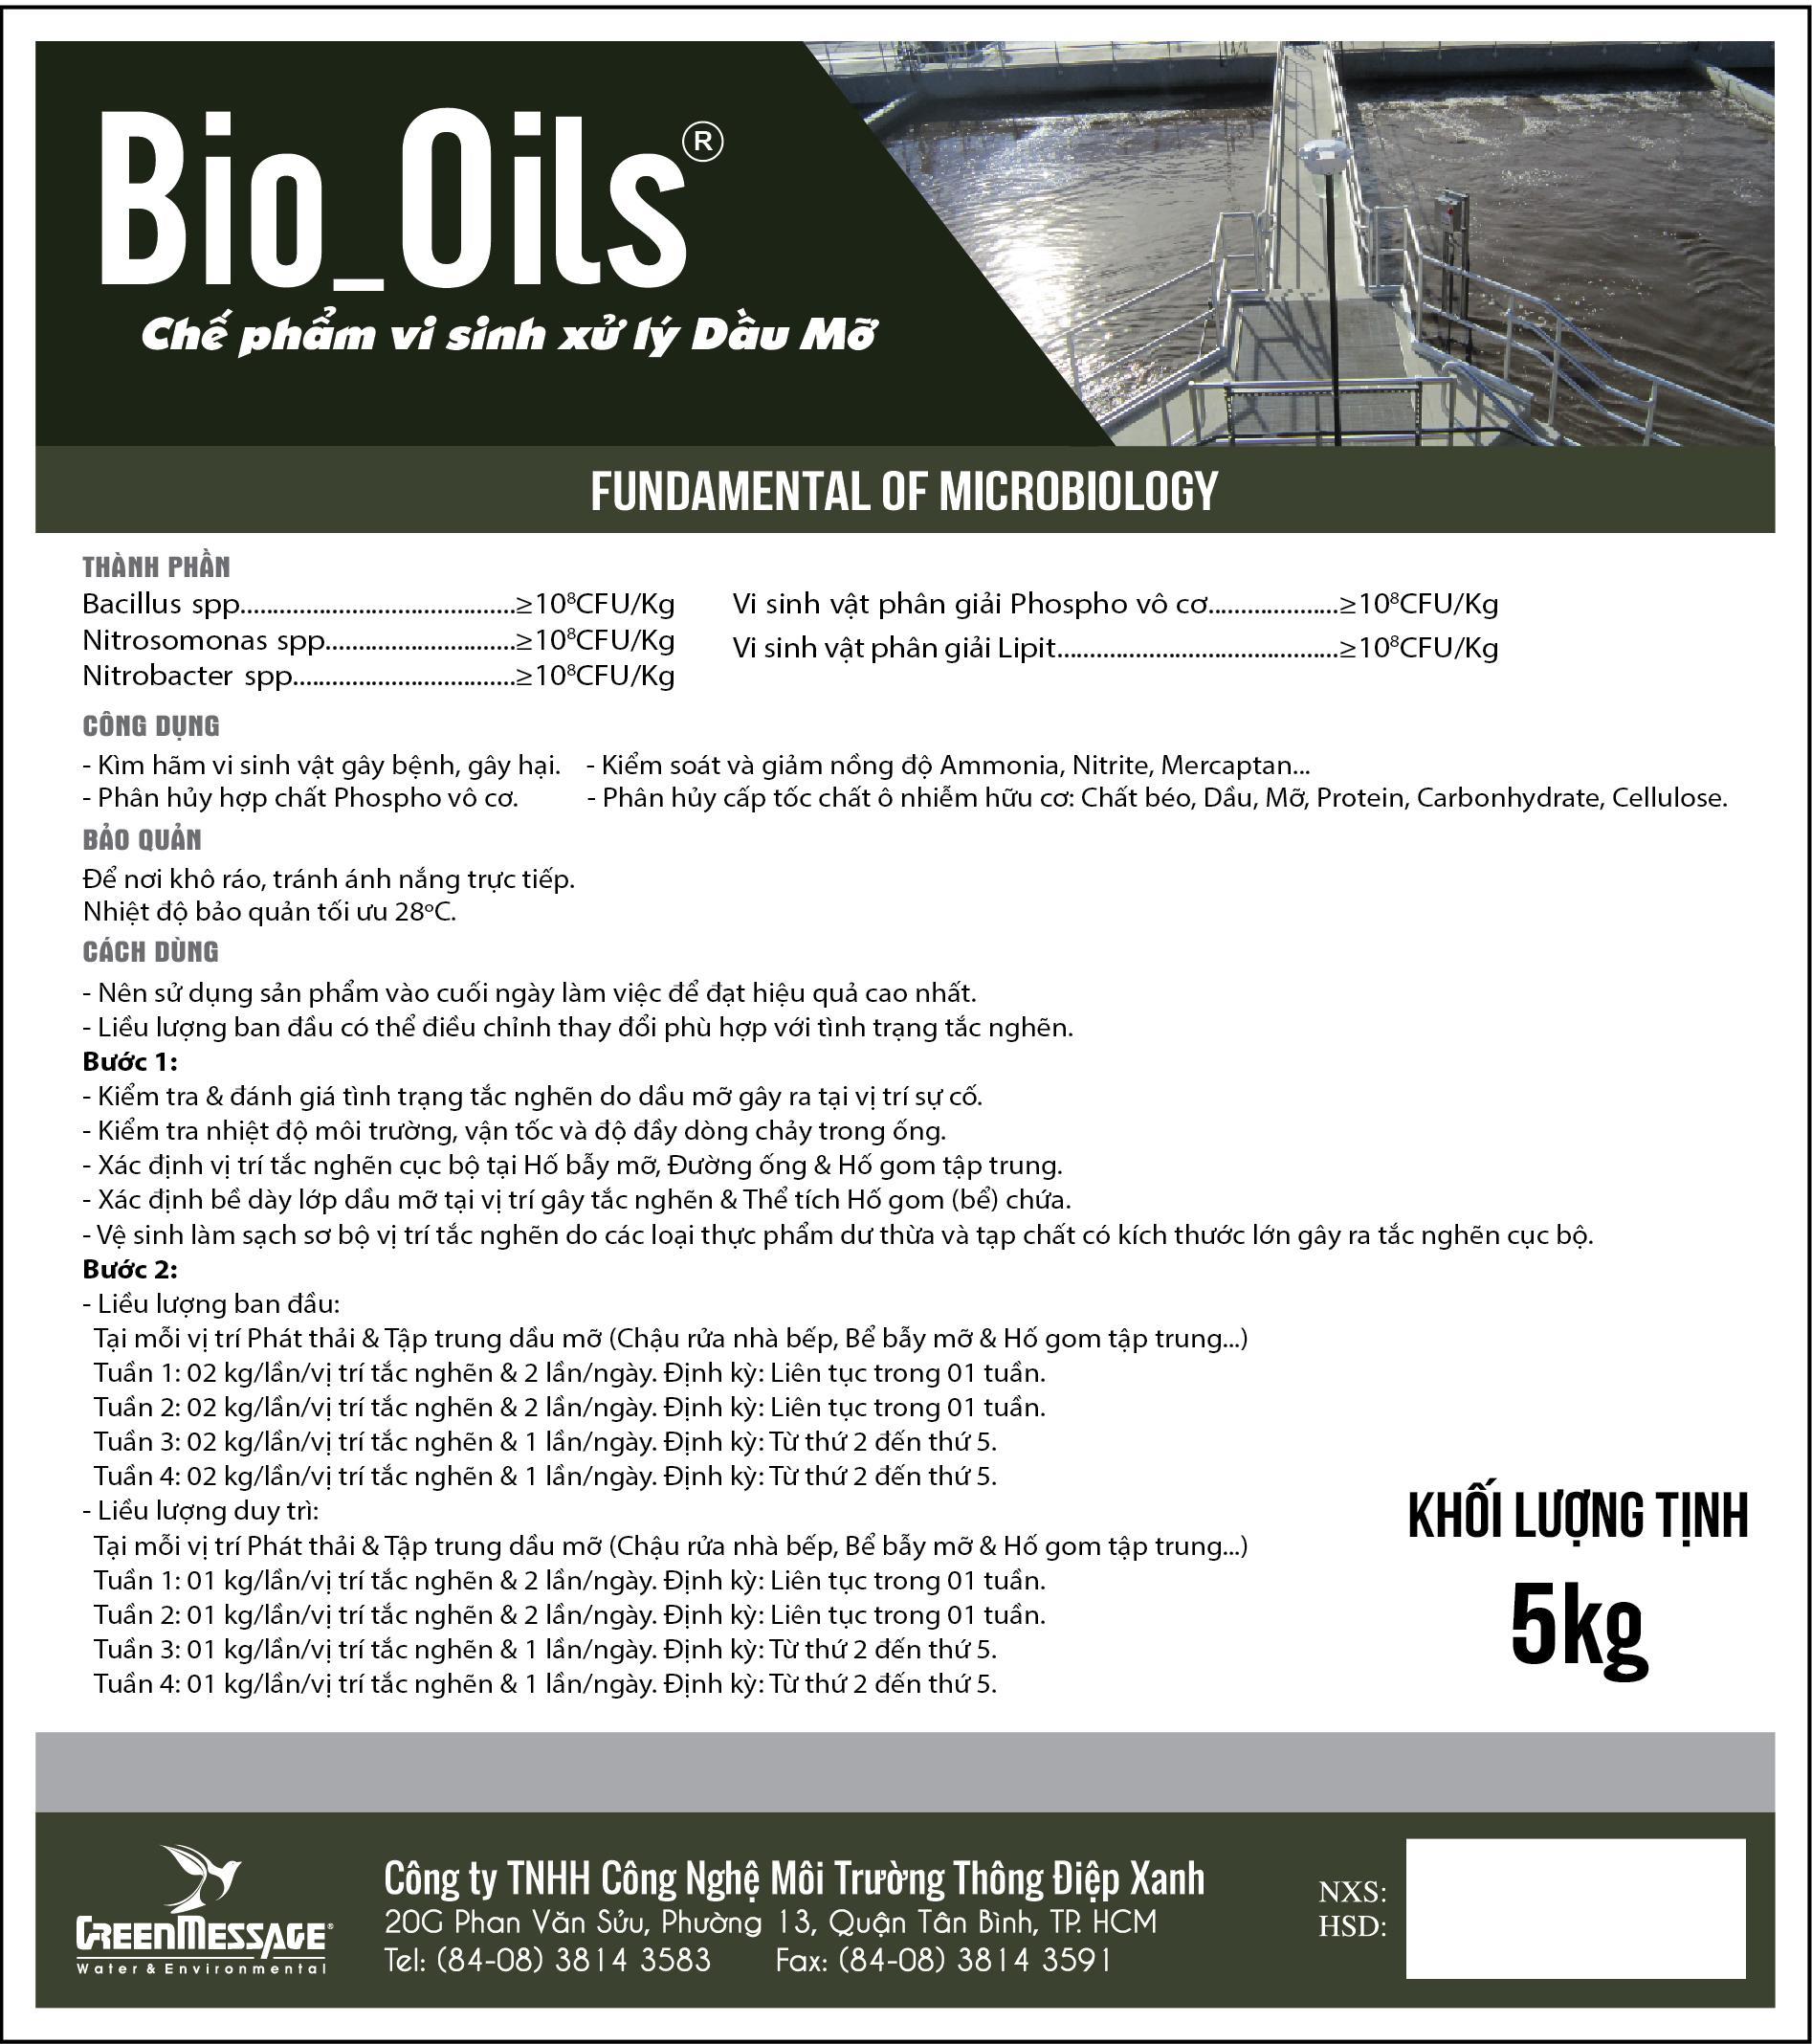 Bio_Oils - Chế phẩm vi sinh xử lý Dầu mỡ